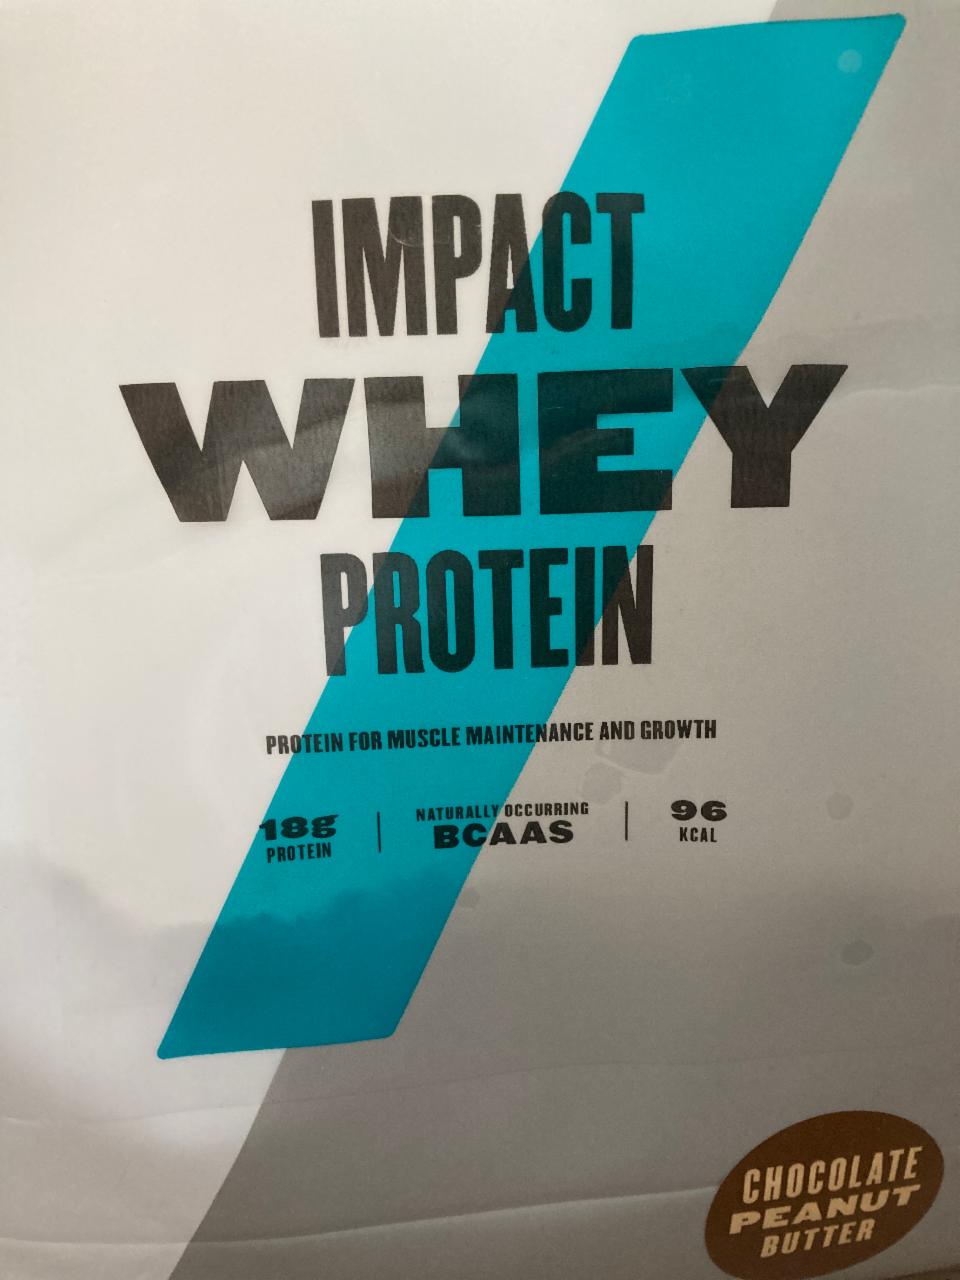 Fotografie - Impact Whey Protein Chocolate Peanut Butter Myprotein